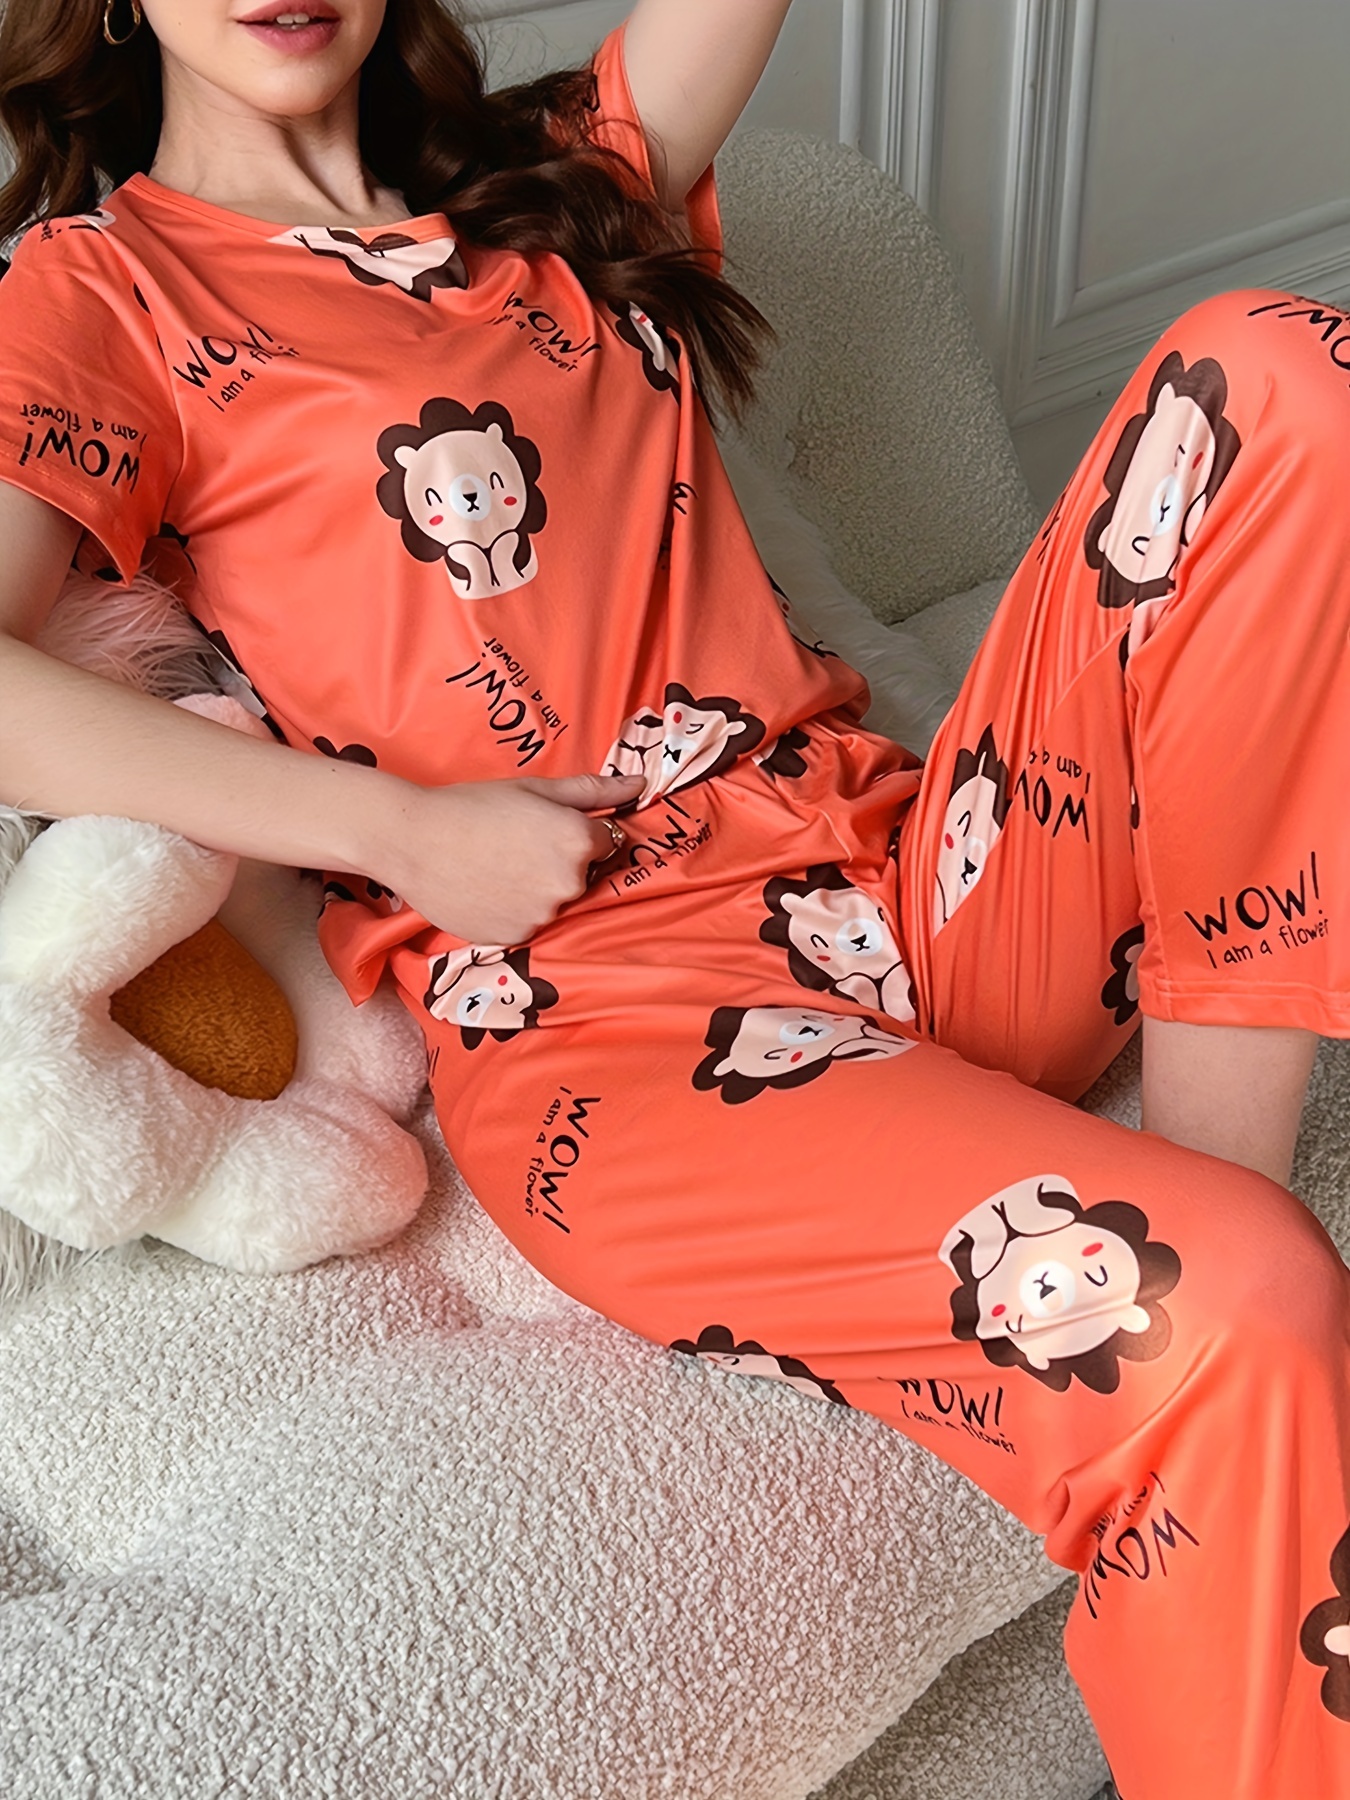 Casual & Comfy Loose Pajamas Set, Cute Cow Print Short Sleeve Tee Top & Cow  Spots Pants, Women's Sleepwear & Loungewear